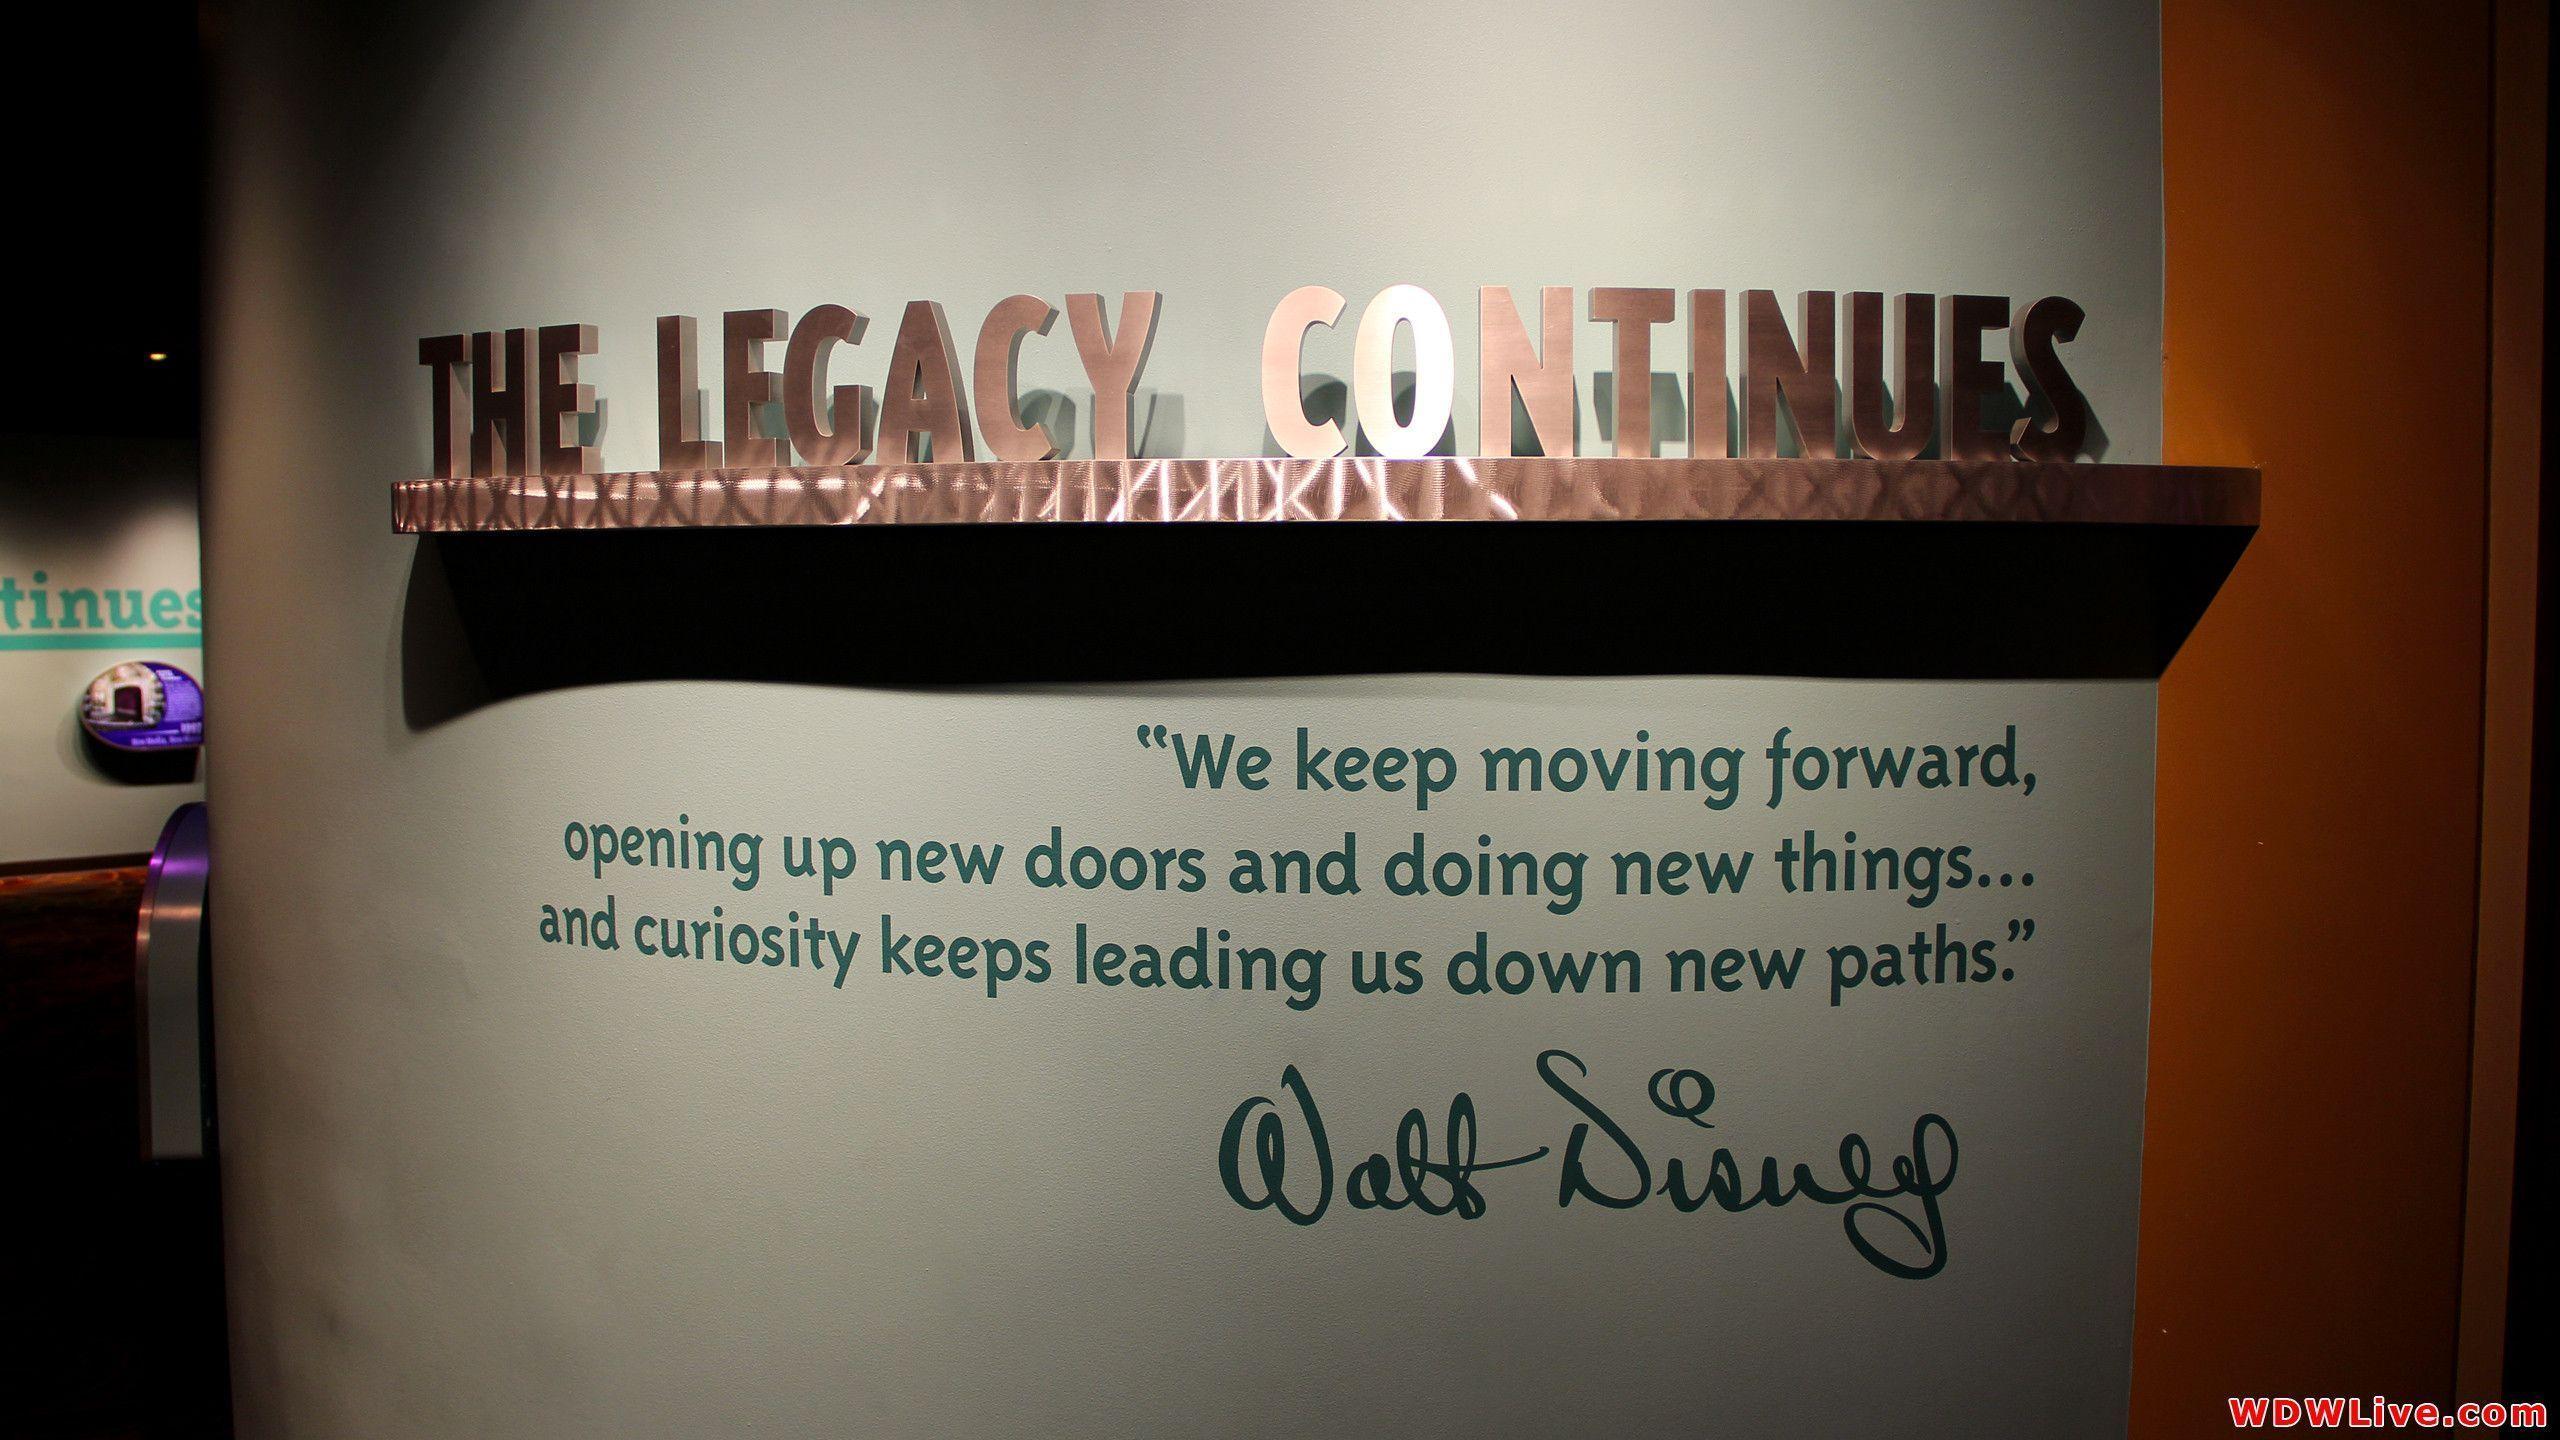 Walt Disney Man&;s Dream: "We keep moving forward, opening up